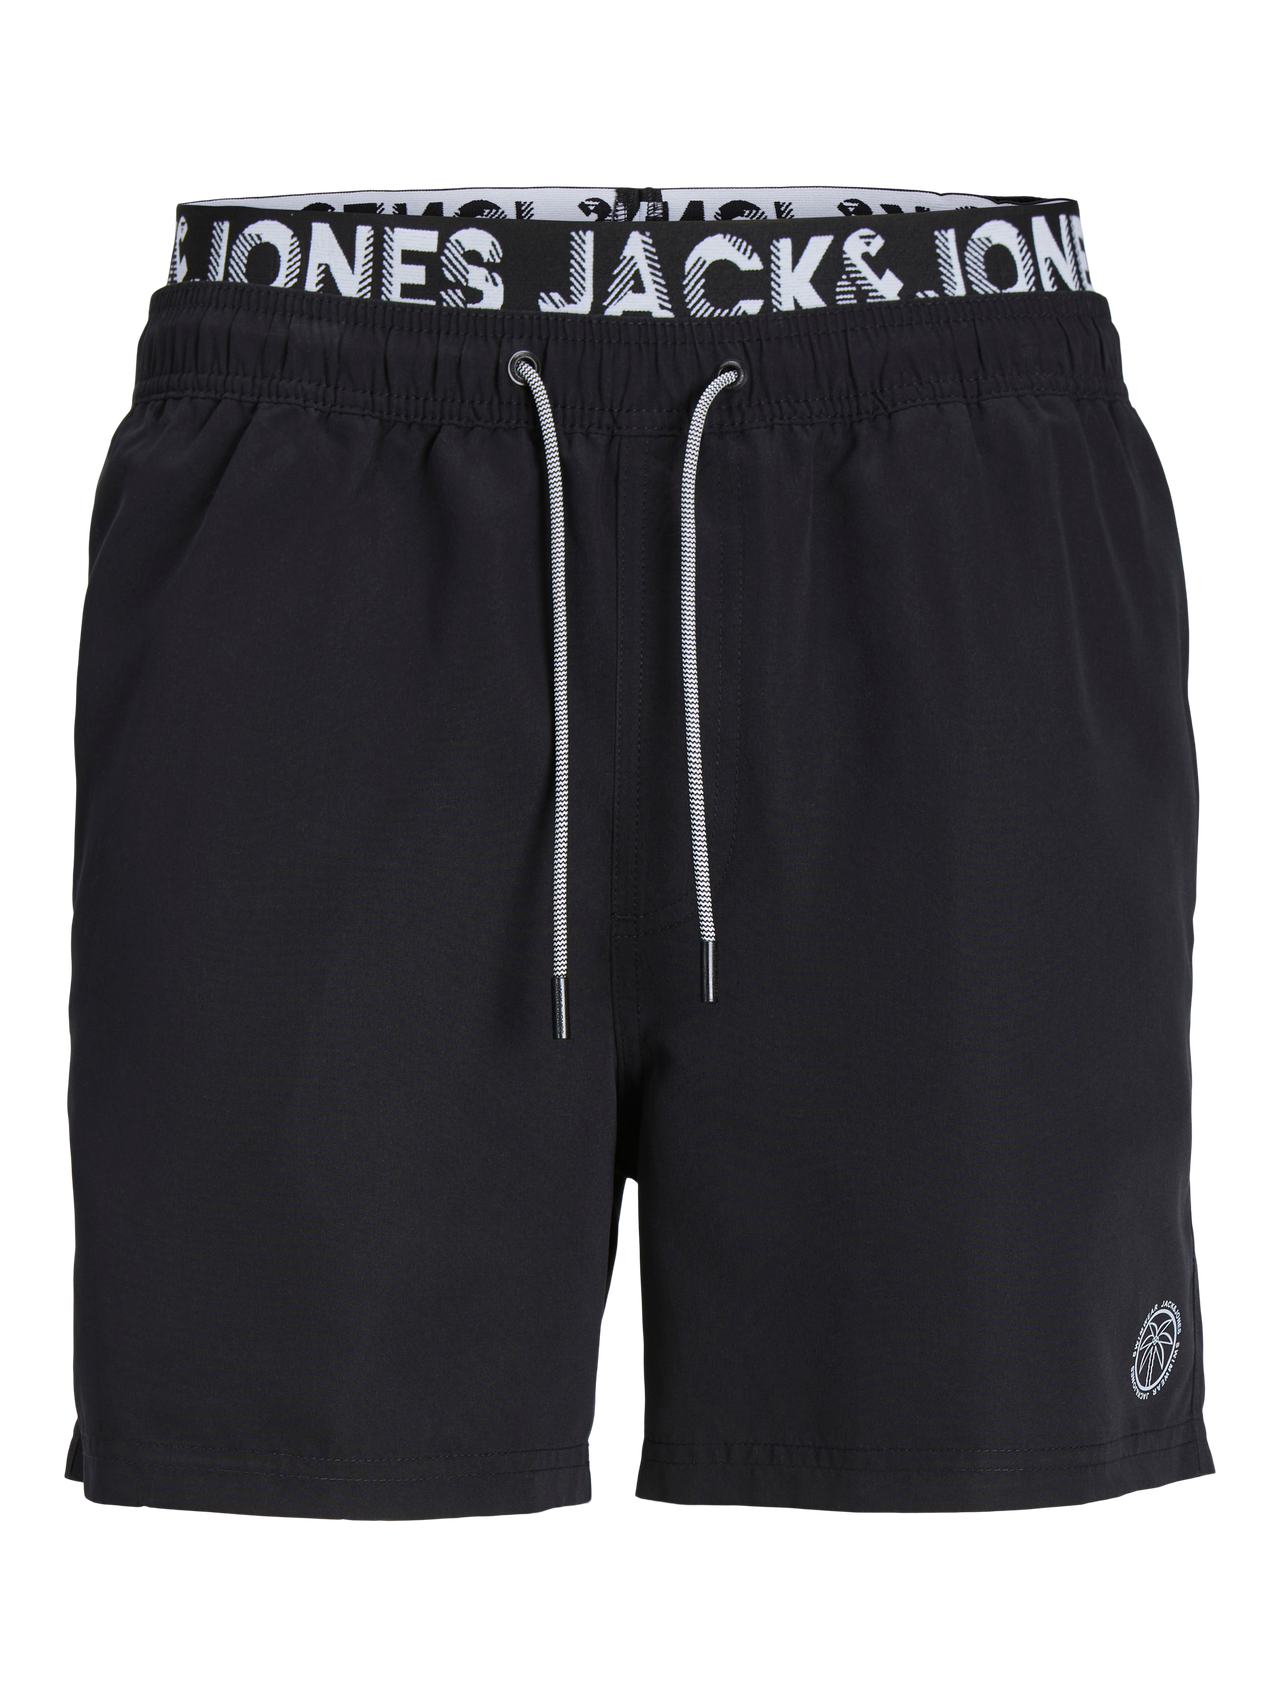 Jack & Jones BAÑADORE Regular Fit -Black - 12227254